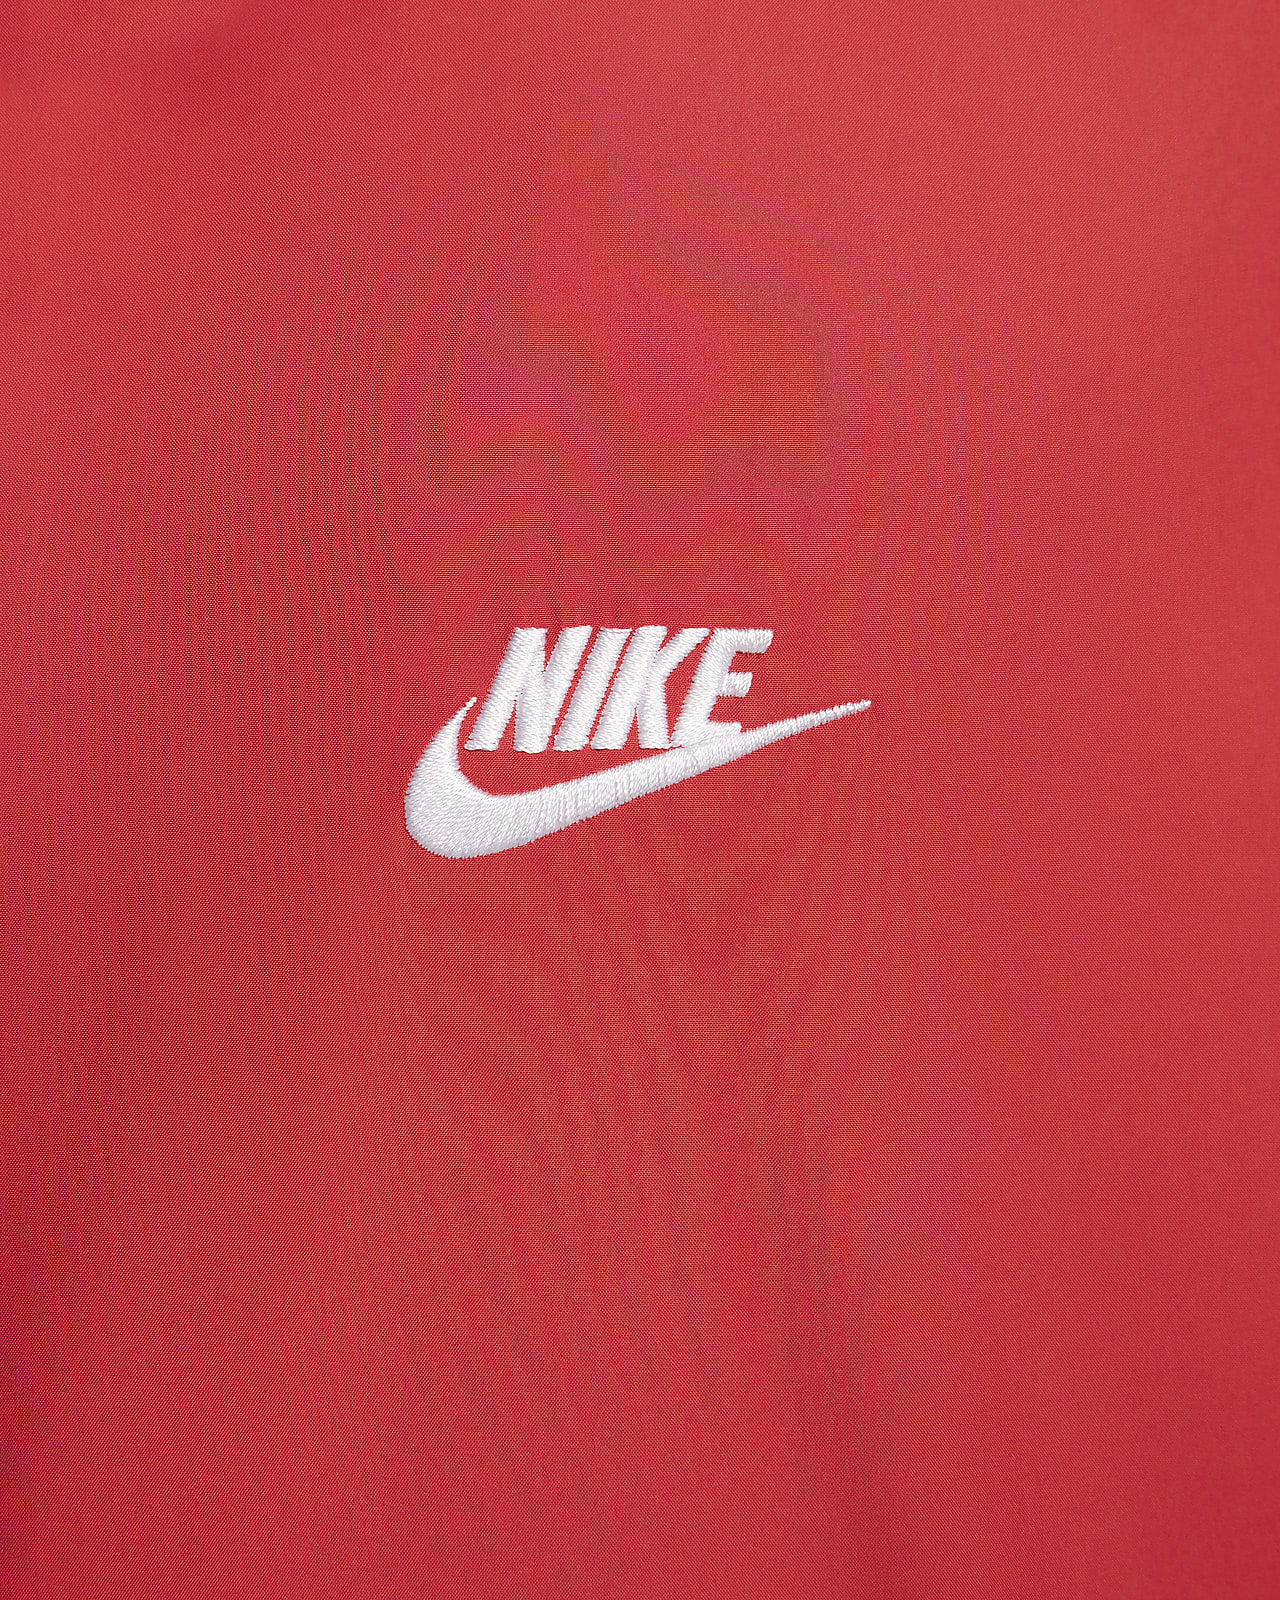 Nike Trend retro logo coach jacket in black